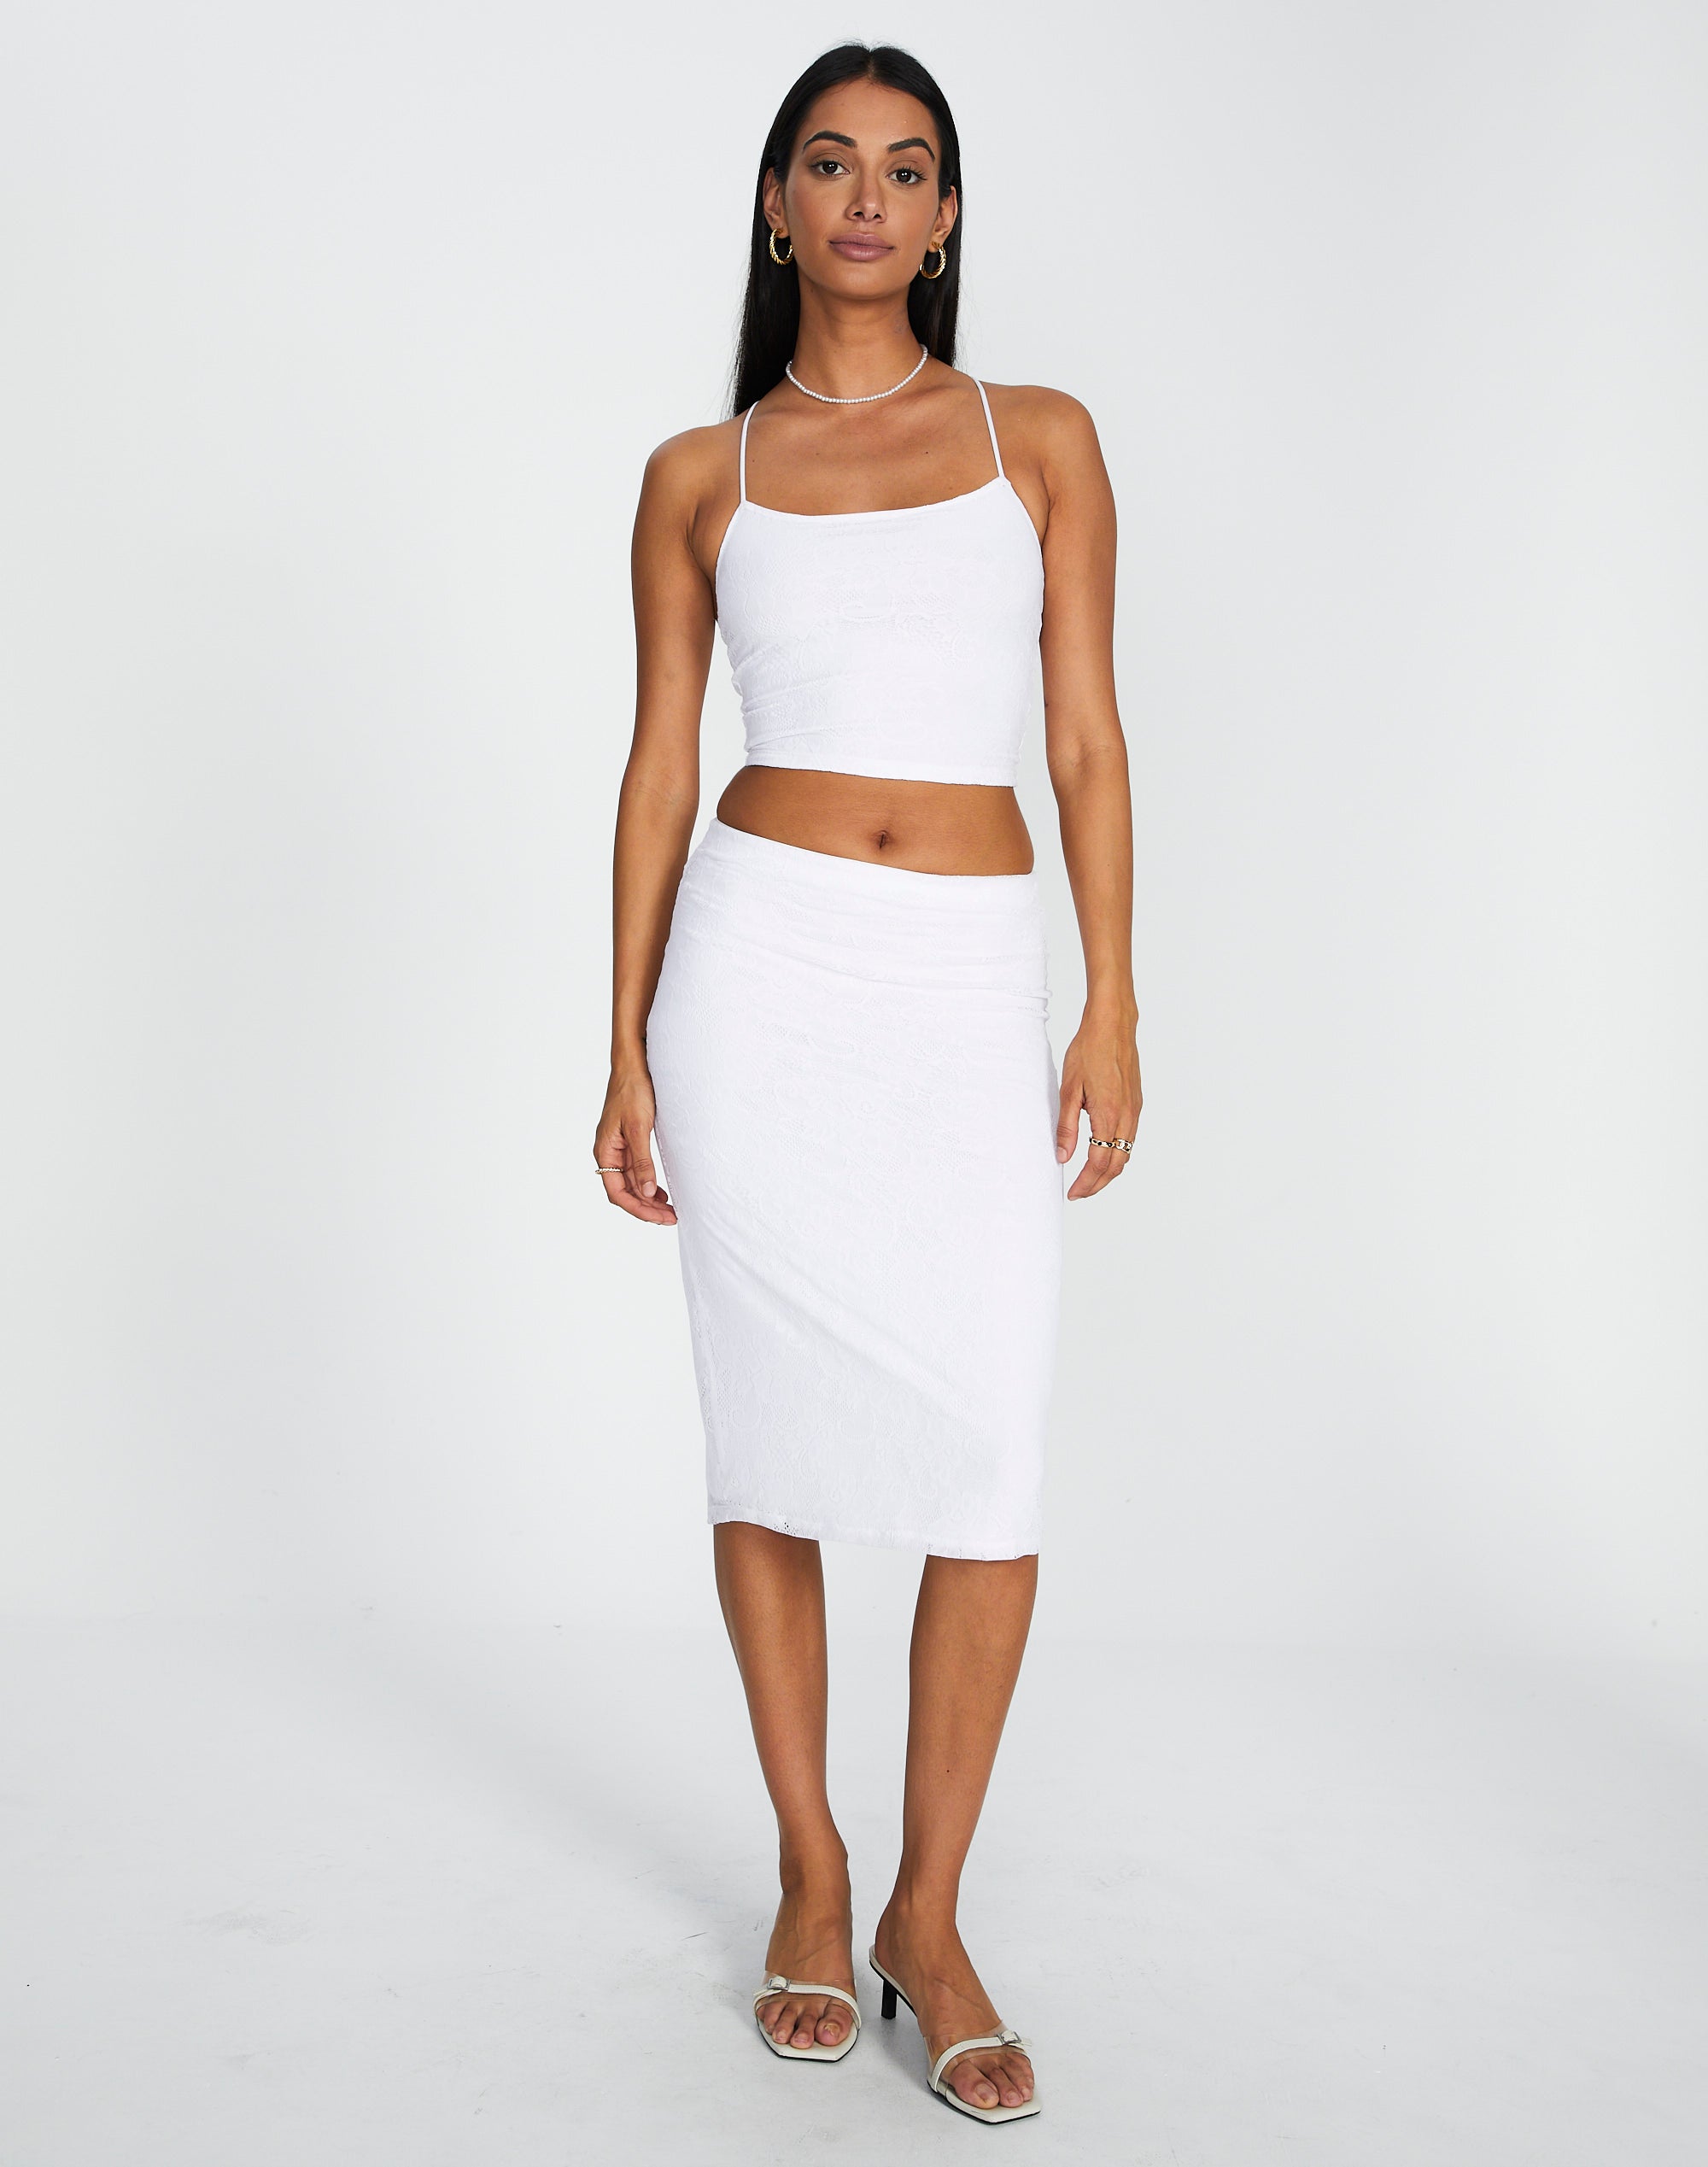 White Ivory Satin Skirt Midi Slip Skirt TWO Layers 100 Real  Etsy   Fashion Style Silk outfit